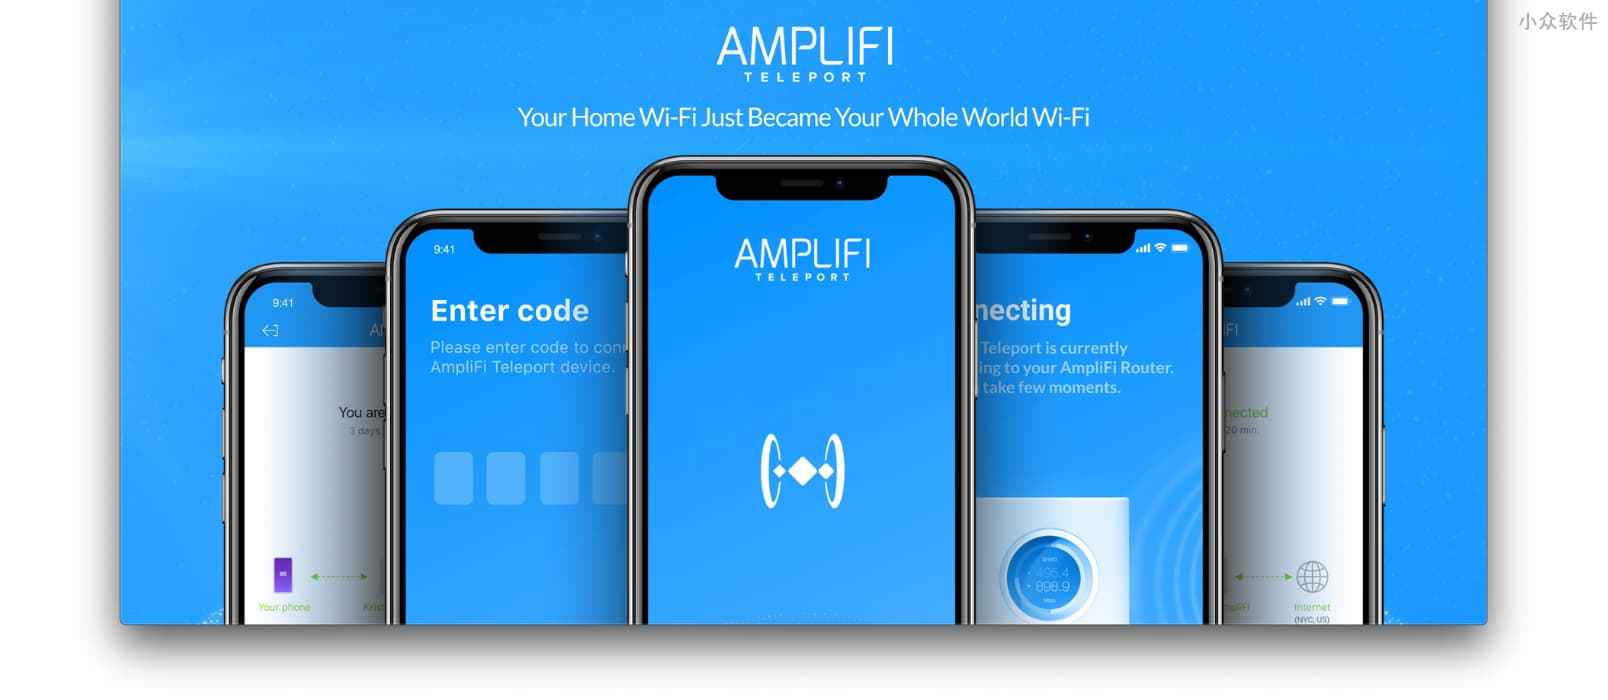 AmpliFi Teleport – 将家中 Wi-Fi 变成你的全球 Wi-Fi